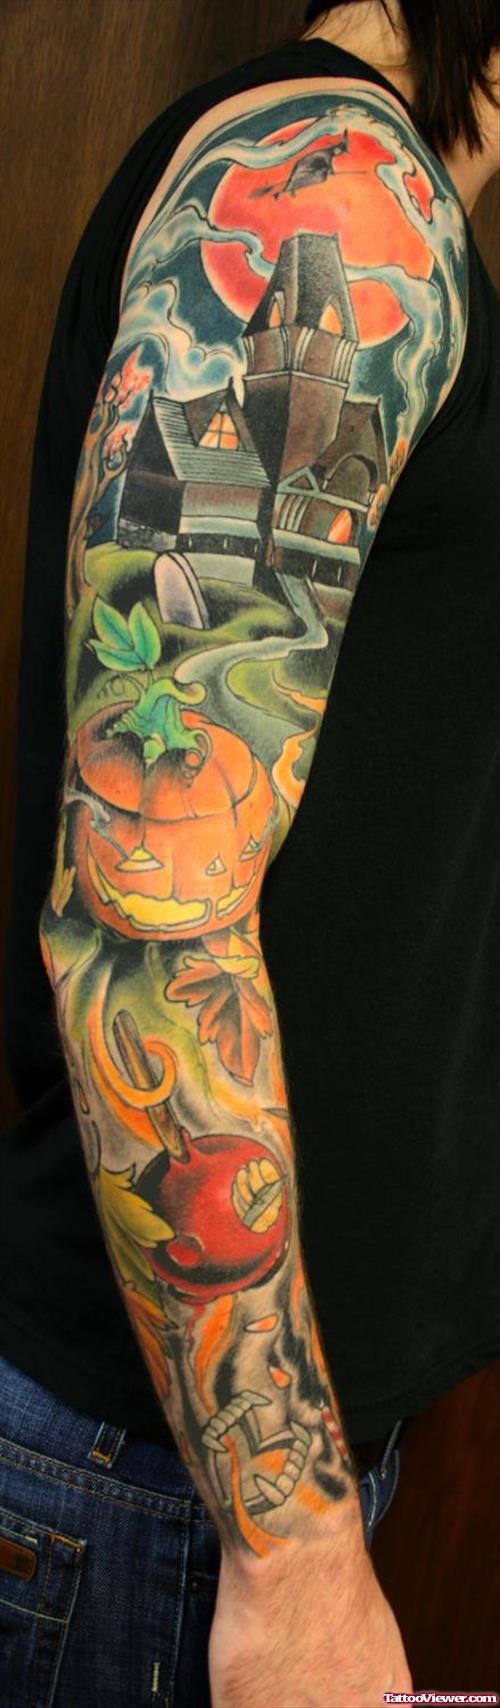 Full Sleeve Color Halloween Tattoo